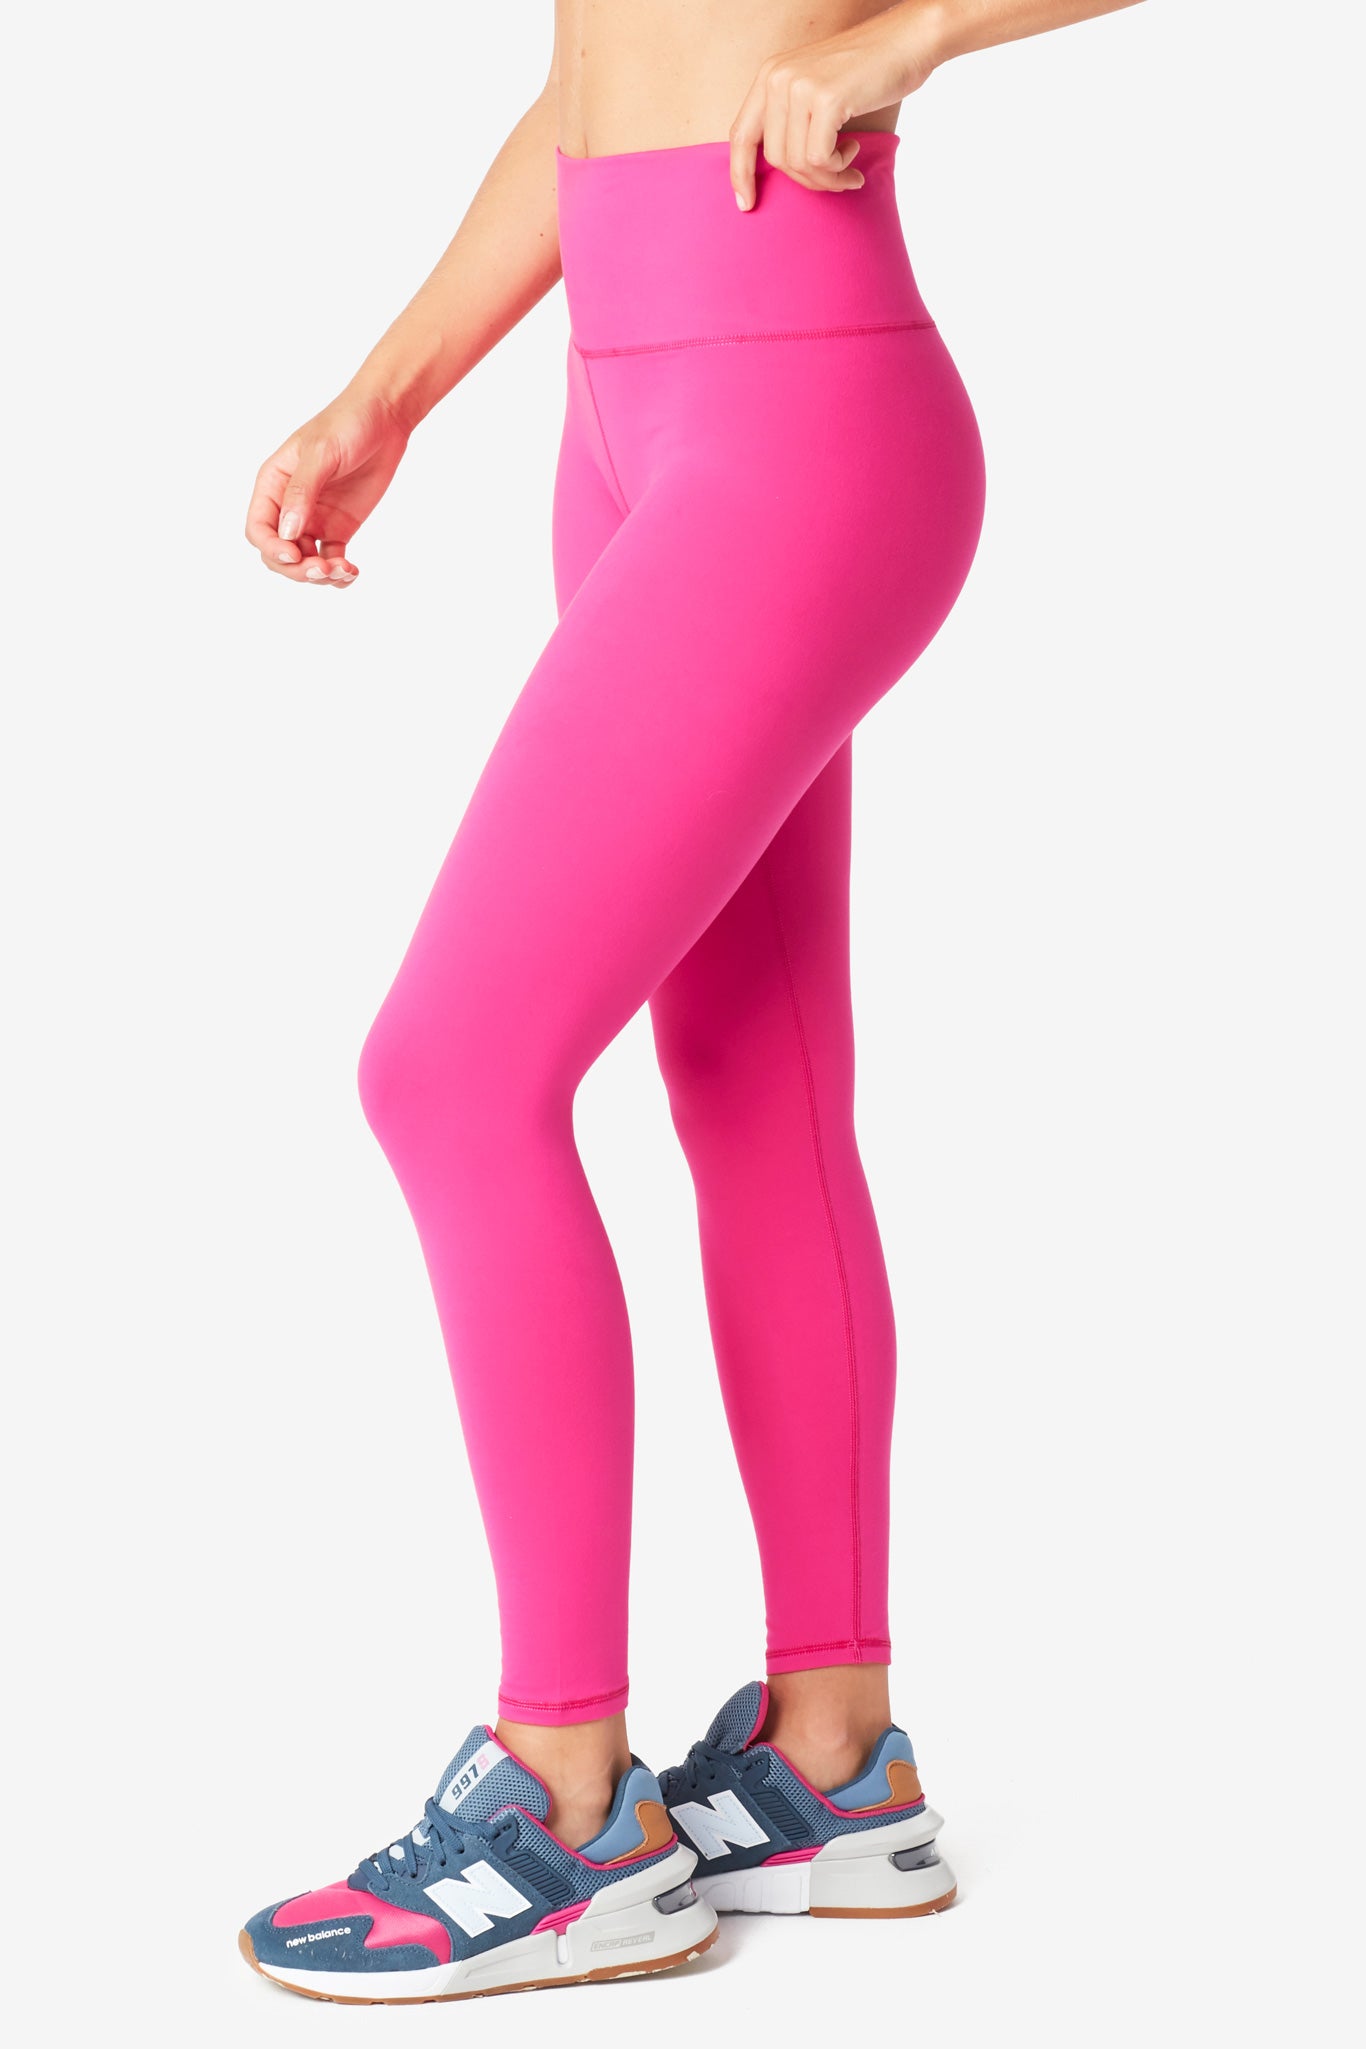 Victoria Secret PINK Leggings-small  Pink leggings, Victoria secret pink,  Clothes design